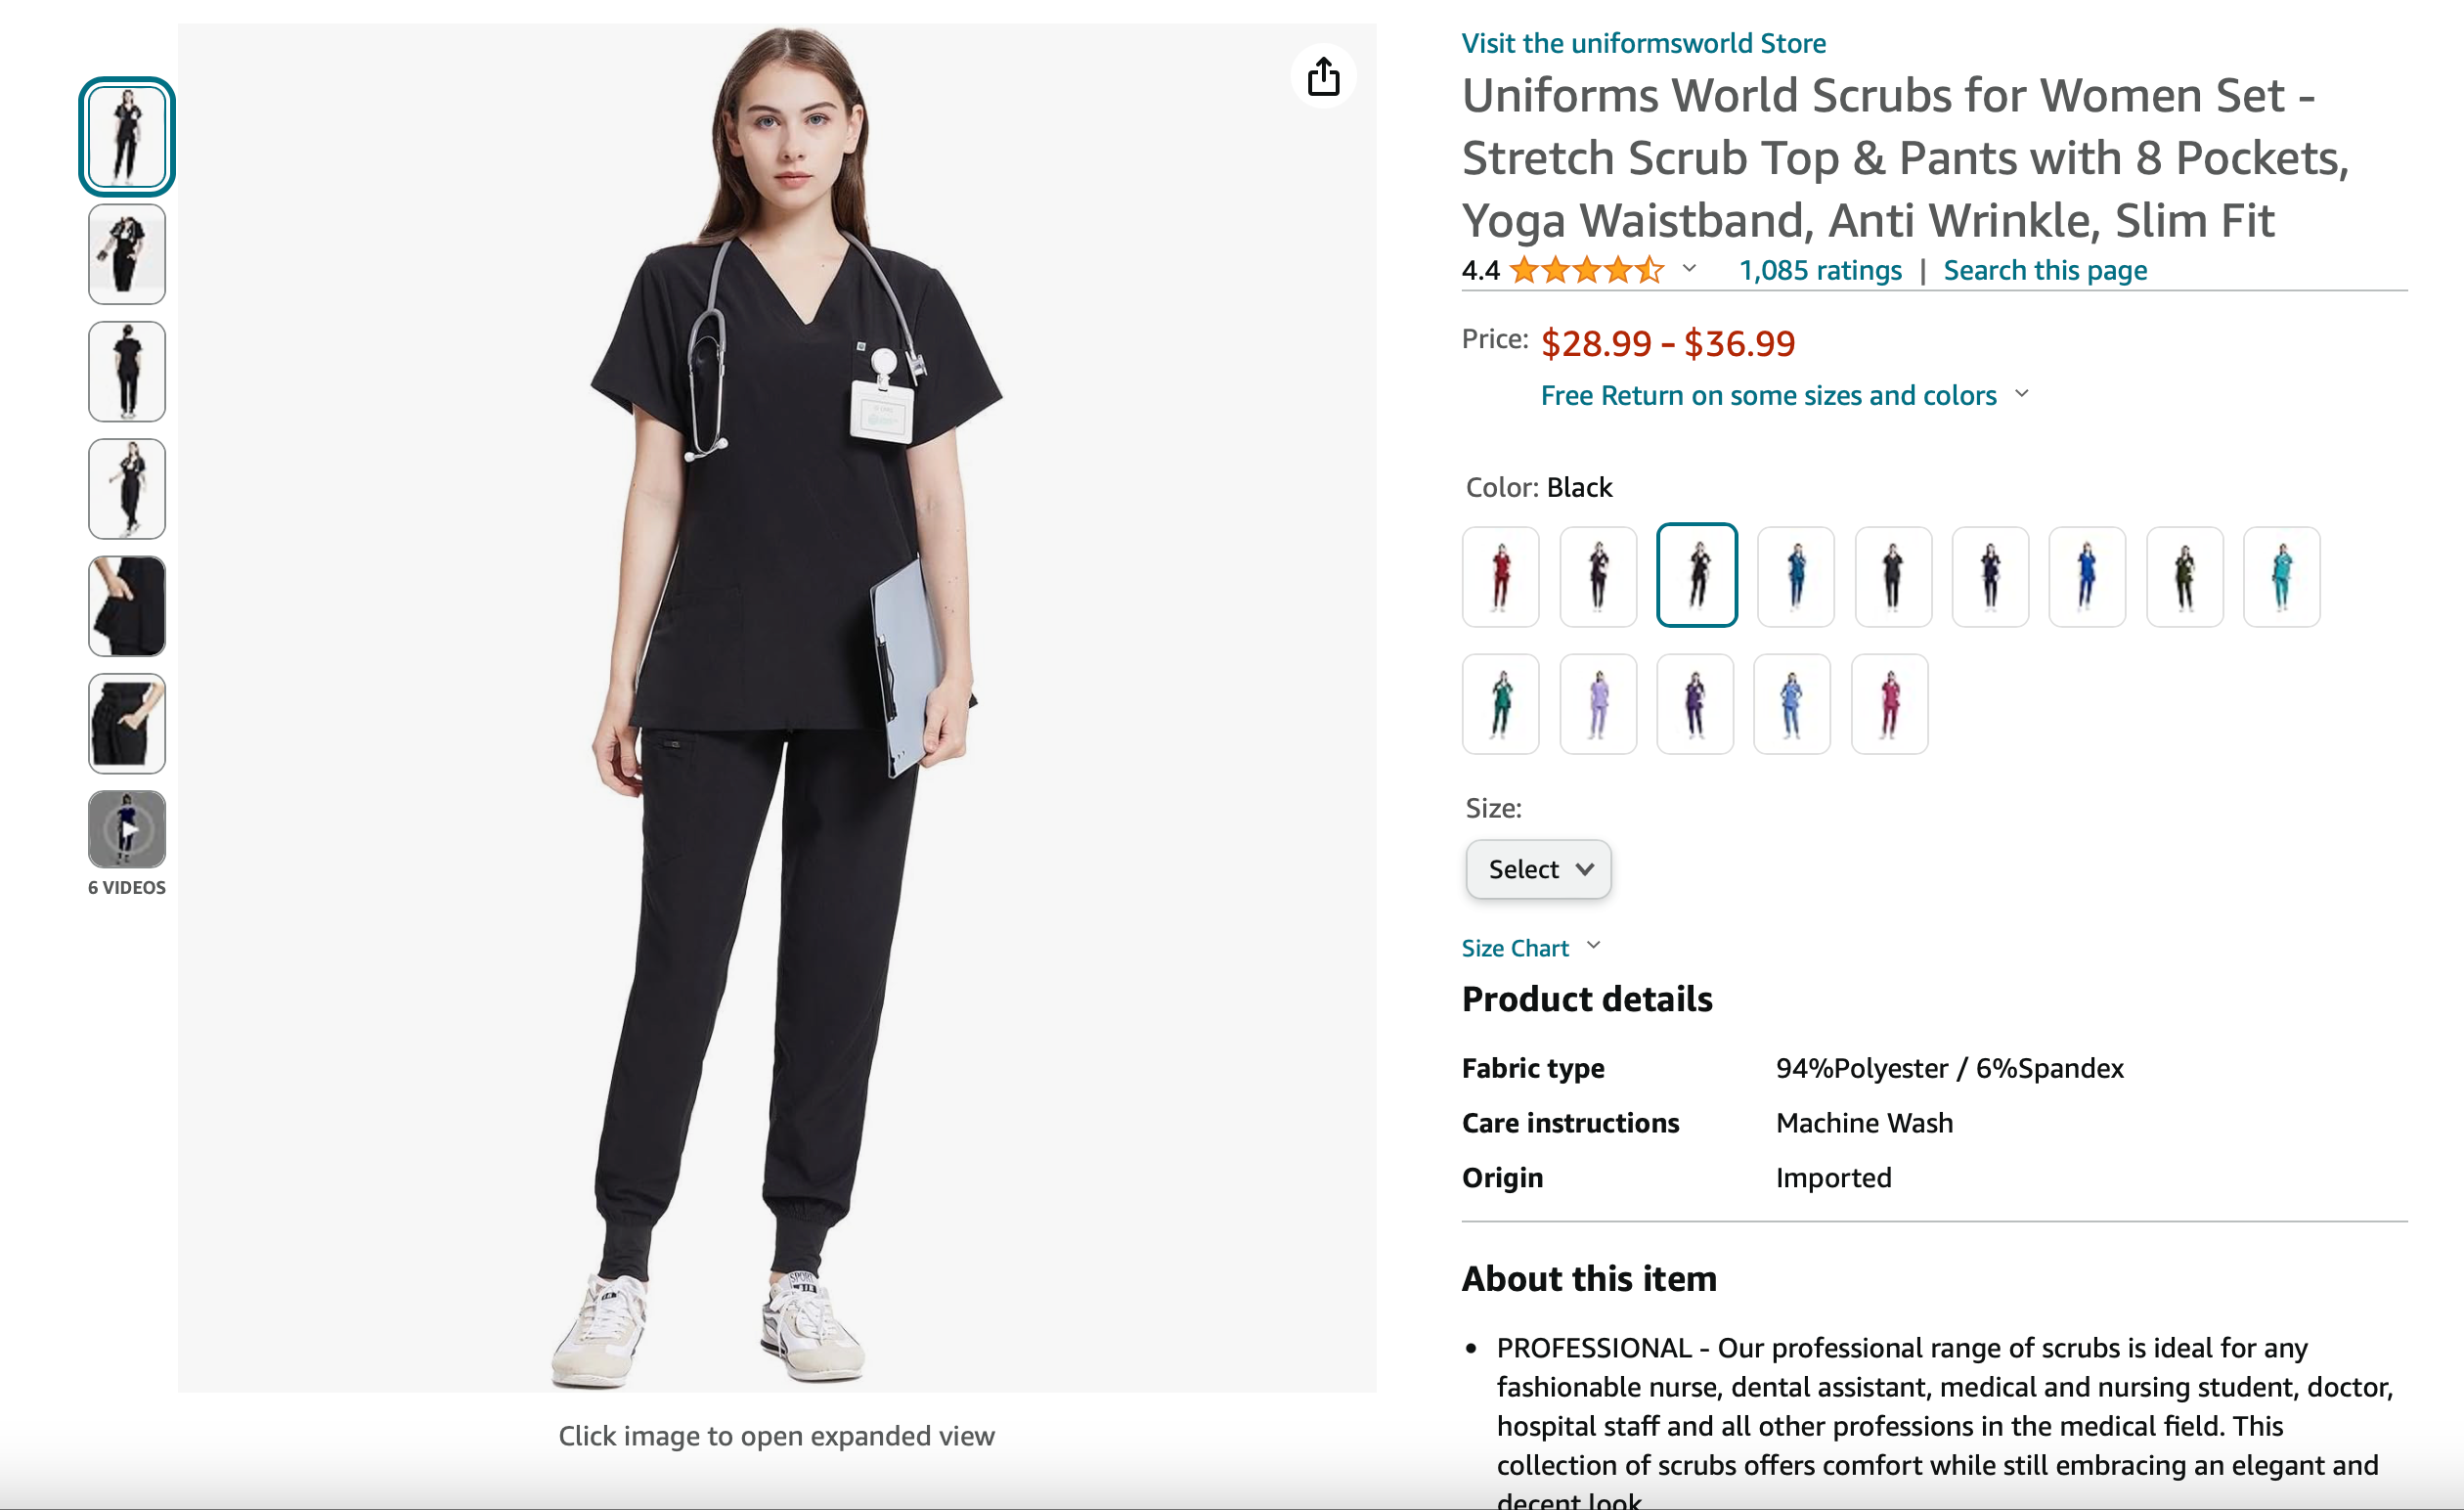 Uniforms World Scrubs for Women Set - Stretch Scrub Top & Pants with 8 Pockets, Yoga Waistband, Anti Wrinkle, Slim Fit